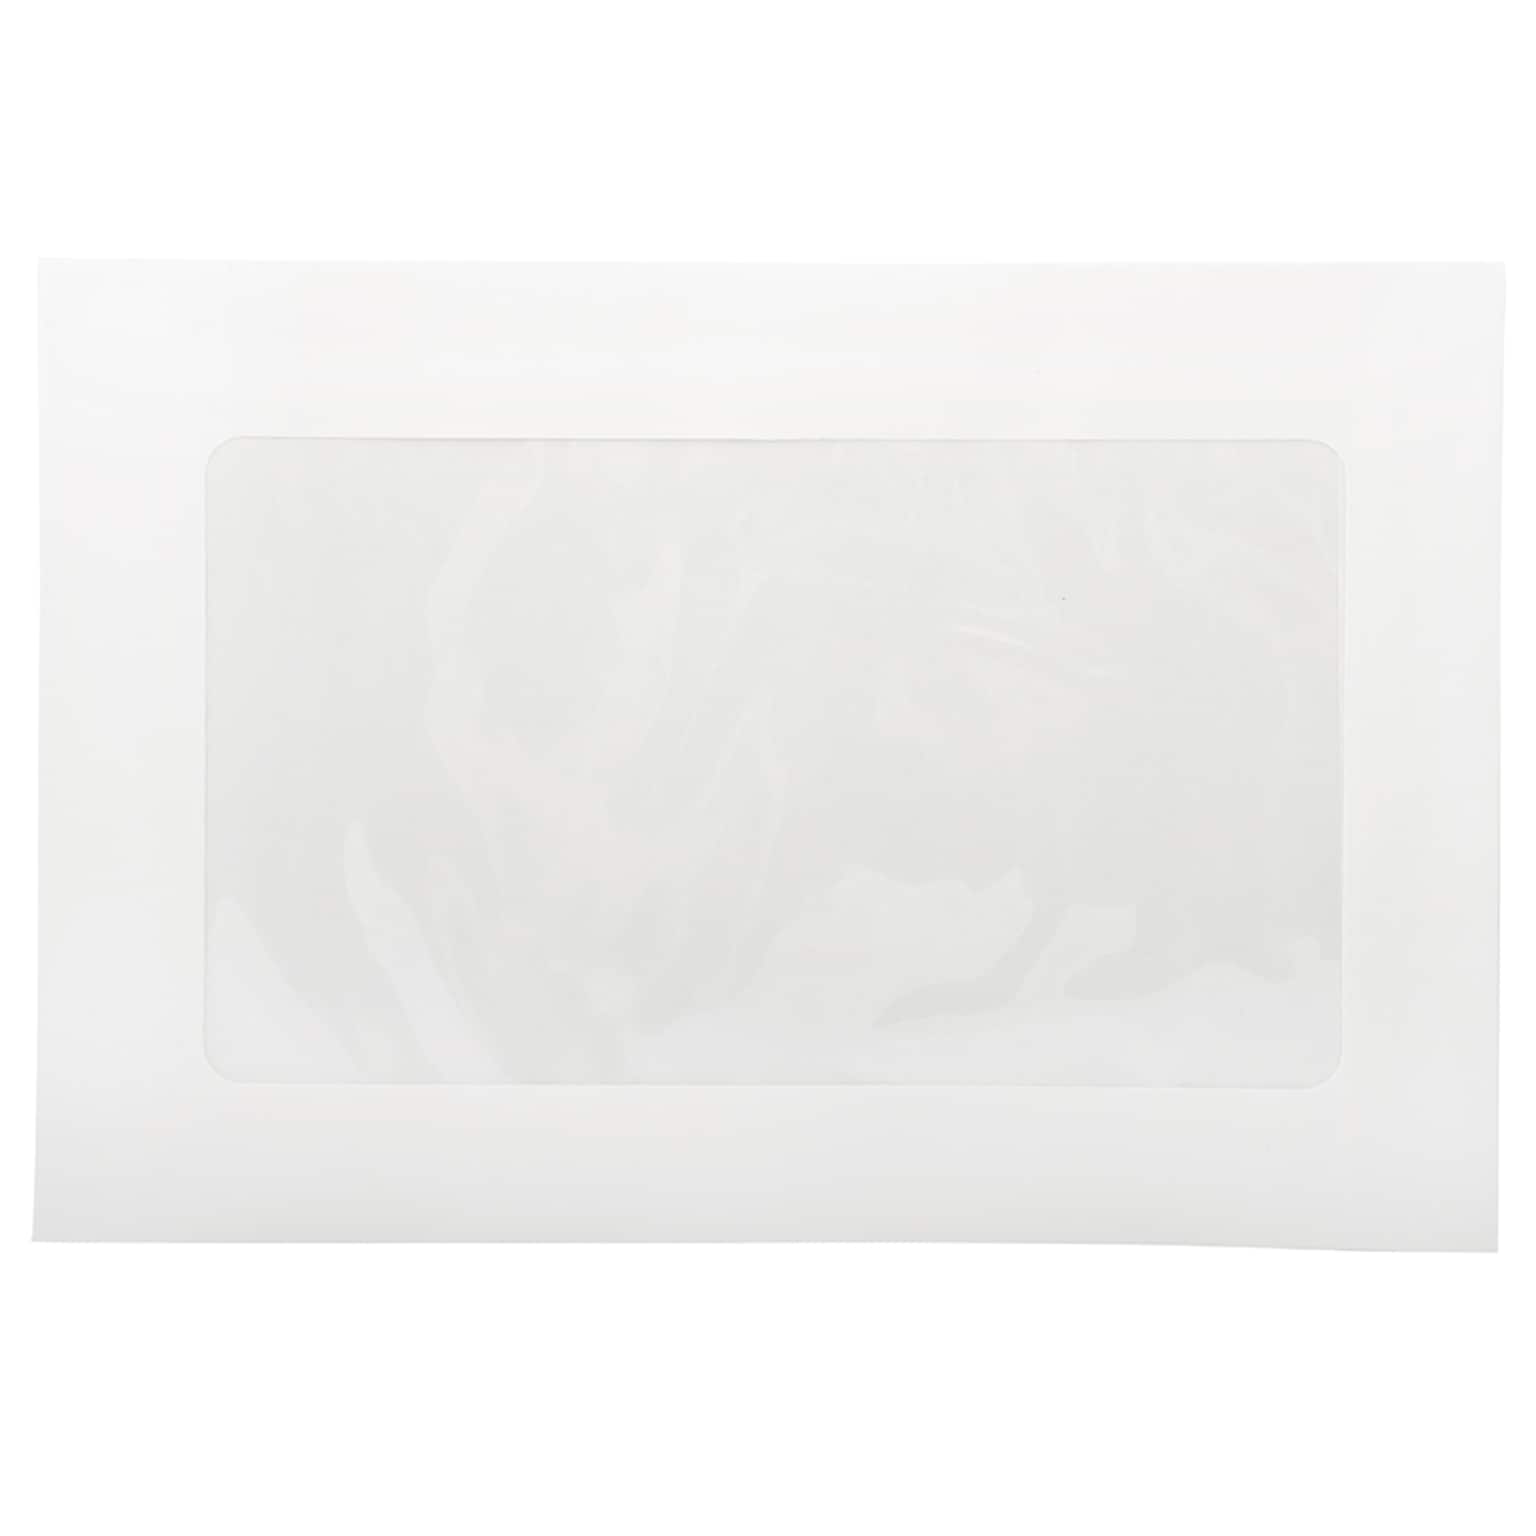 JAM Paper 6 x 9 Booklet Commercial Window Envelopes, White, 25/Pack (223933)